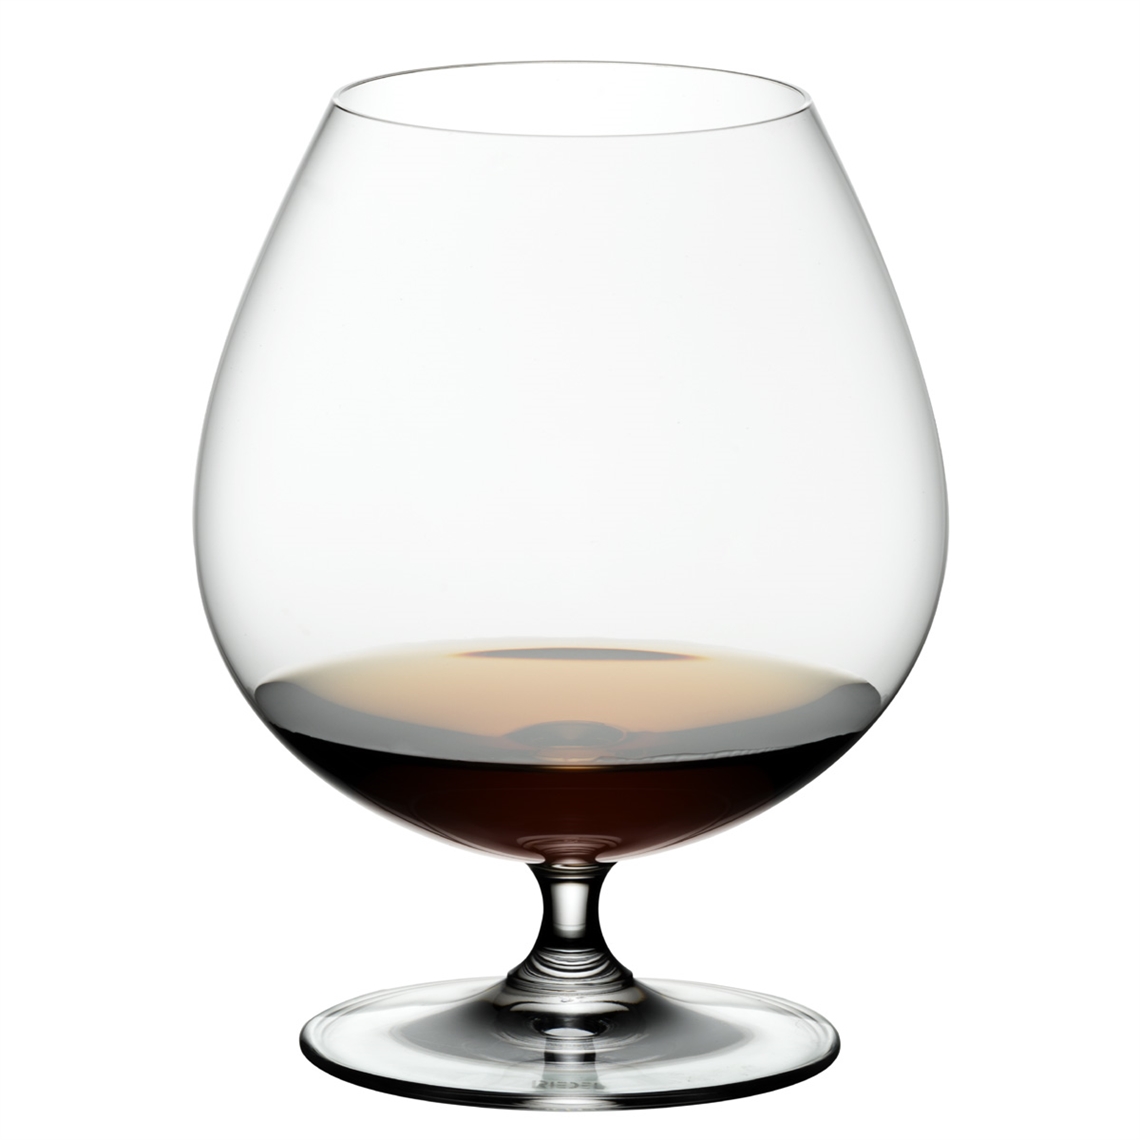 View more rioja wine glasses from our Spirit Glasses range